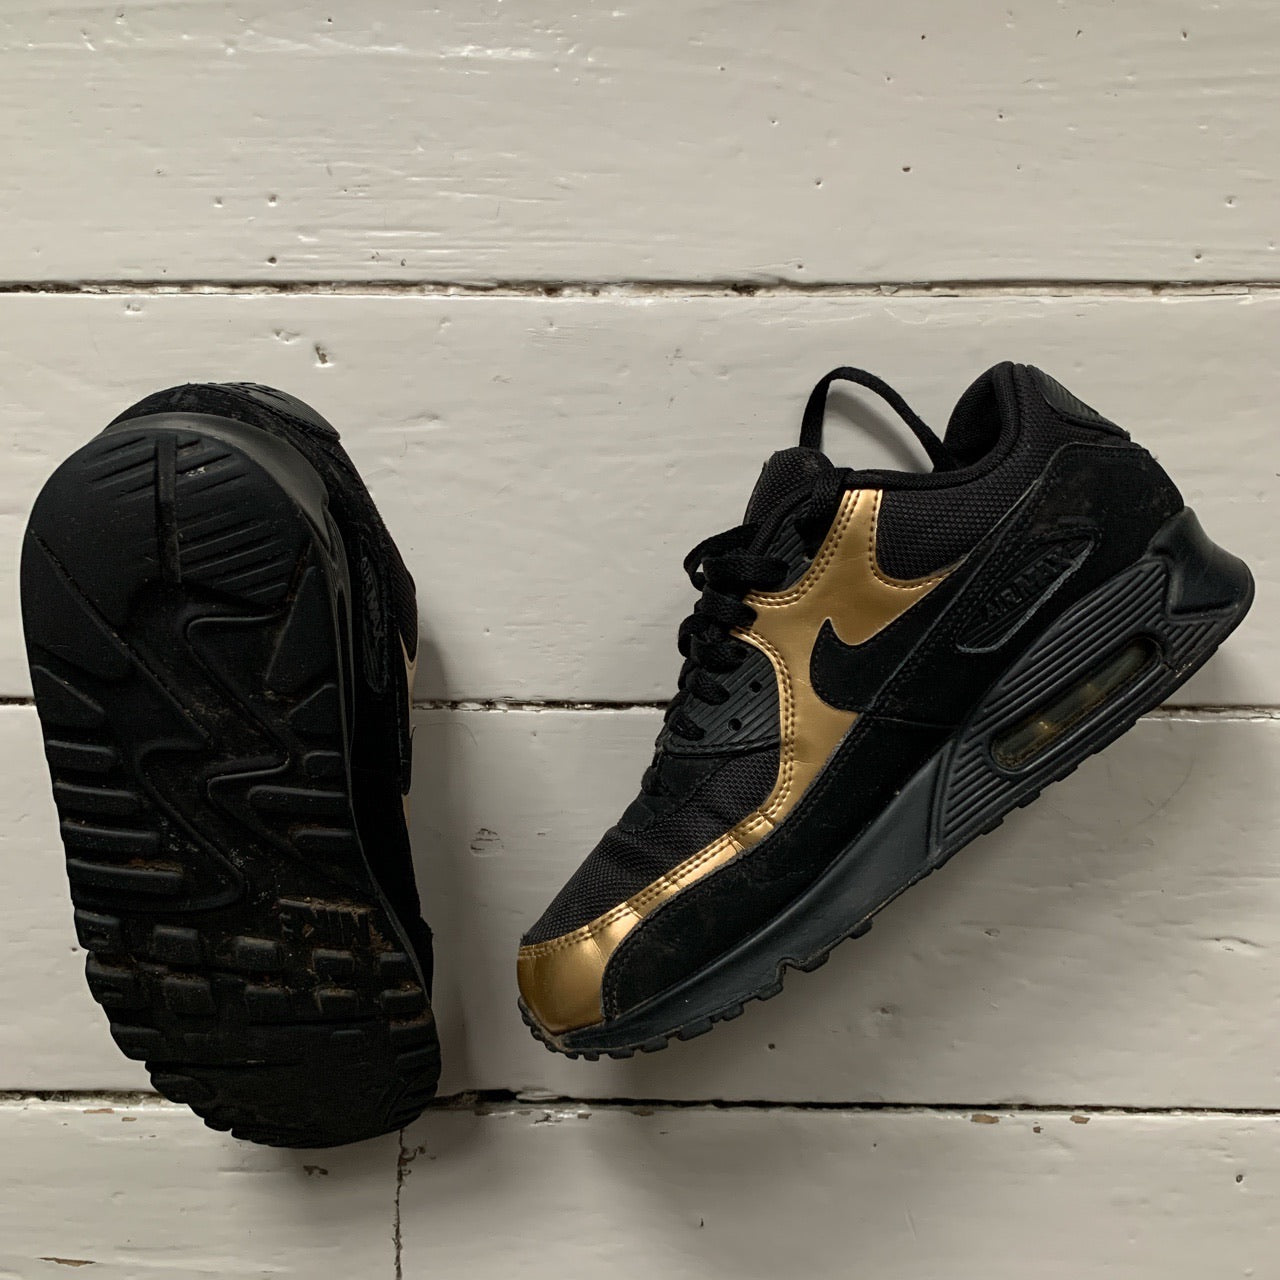 Nike Air Max 90 Black and Gold (UK 8)